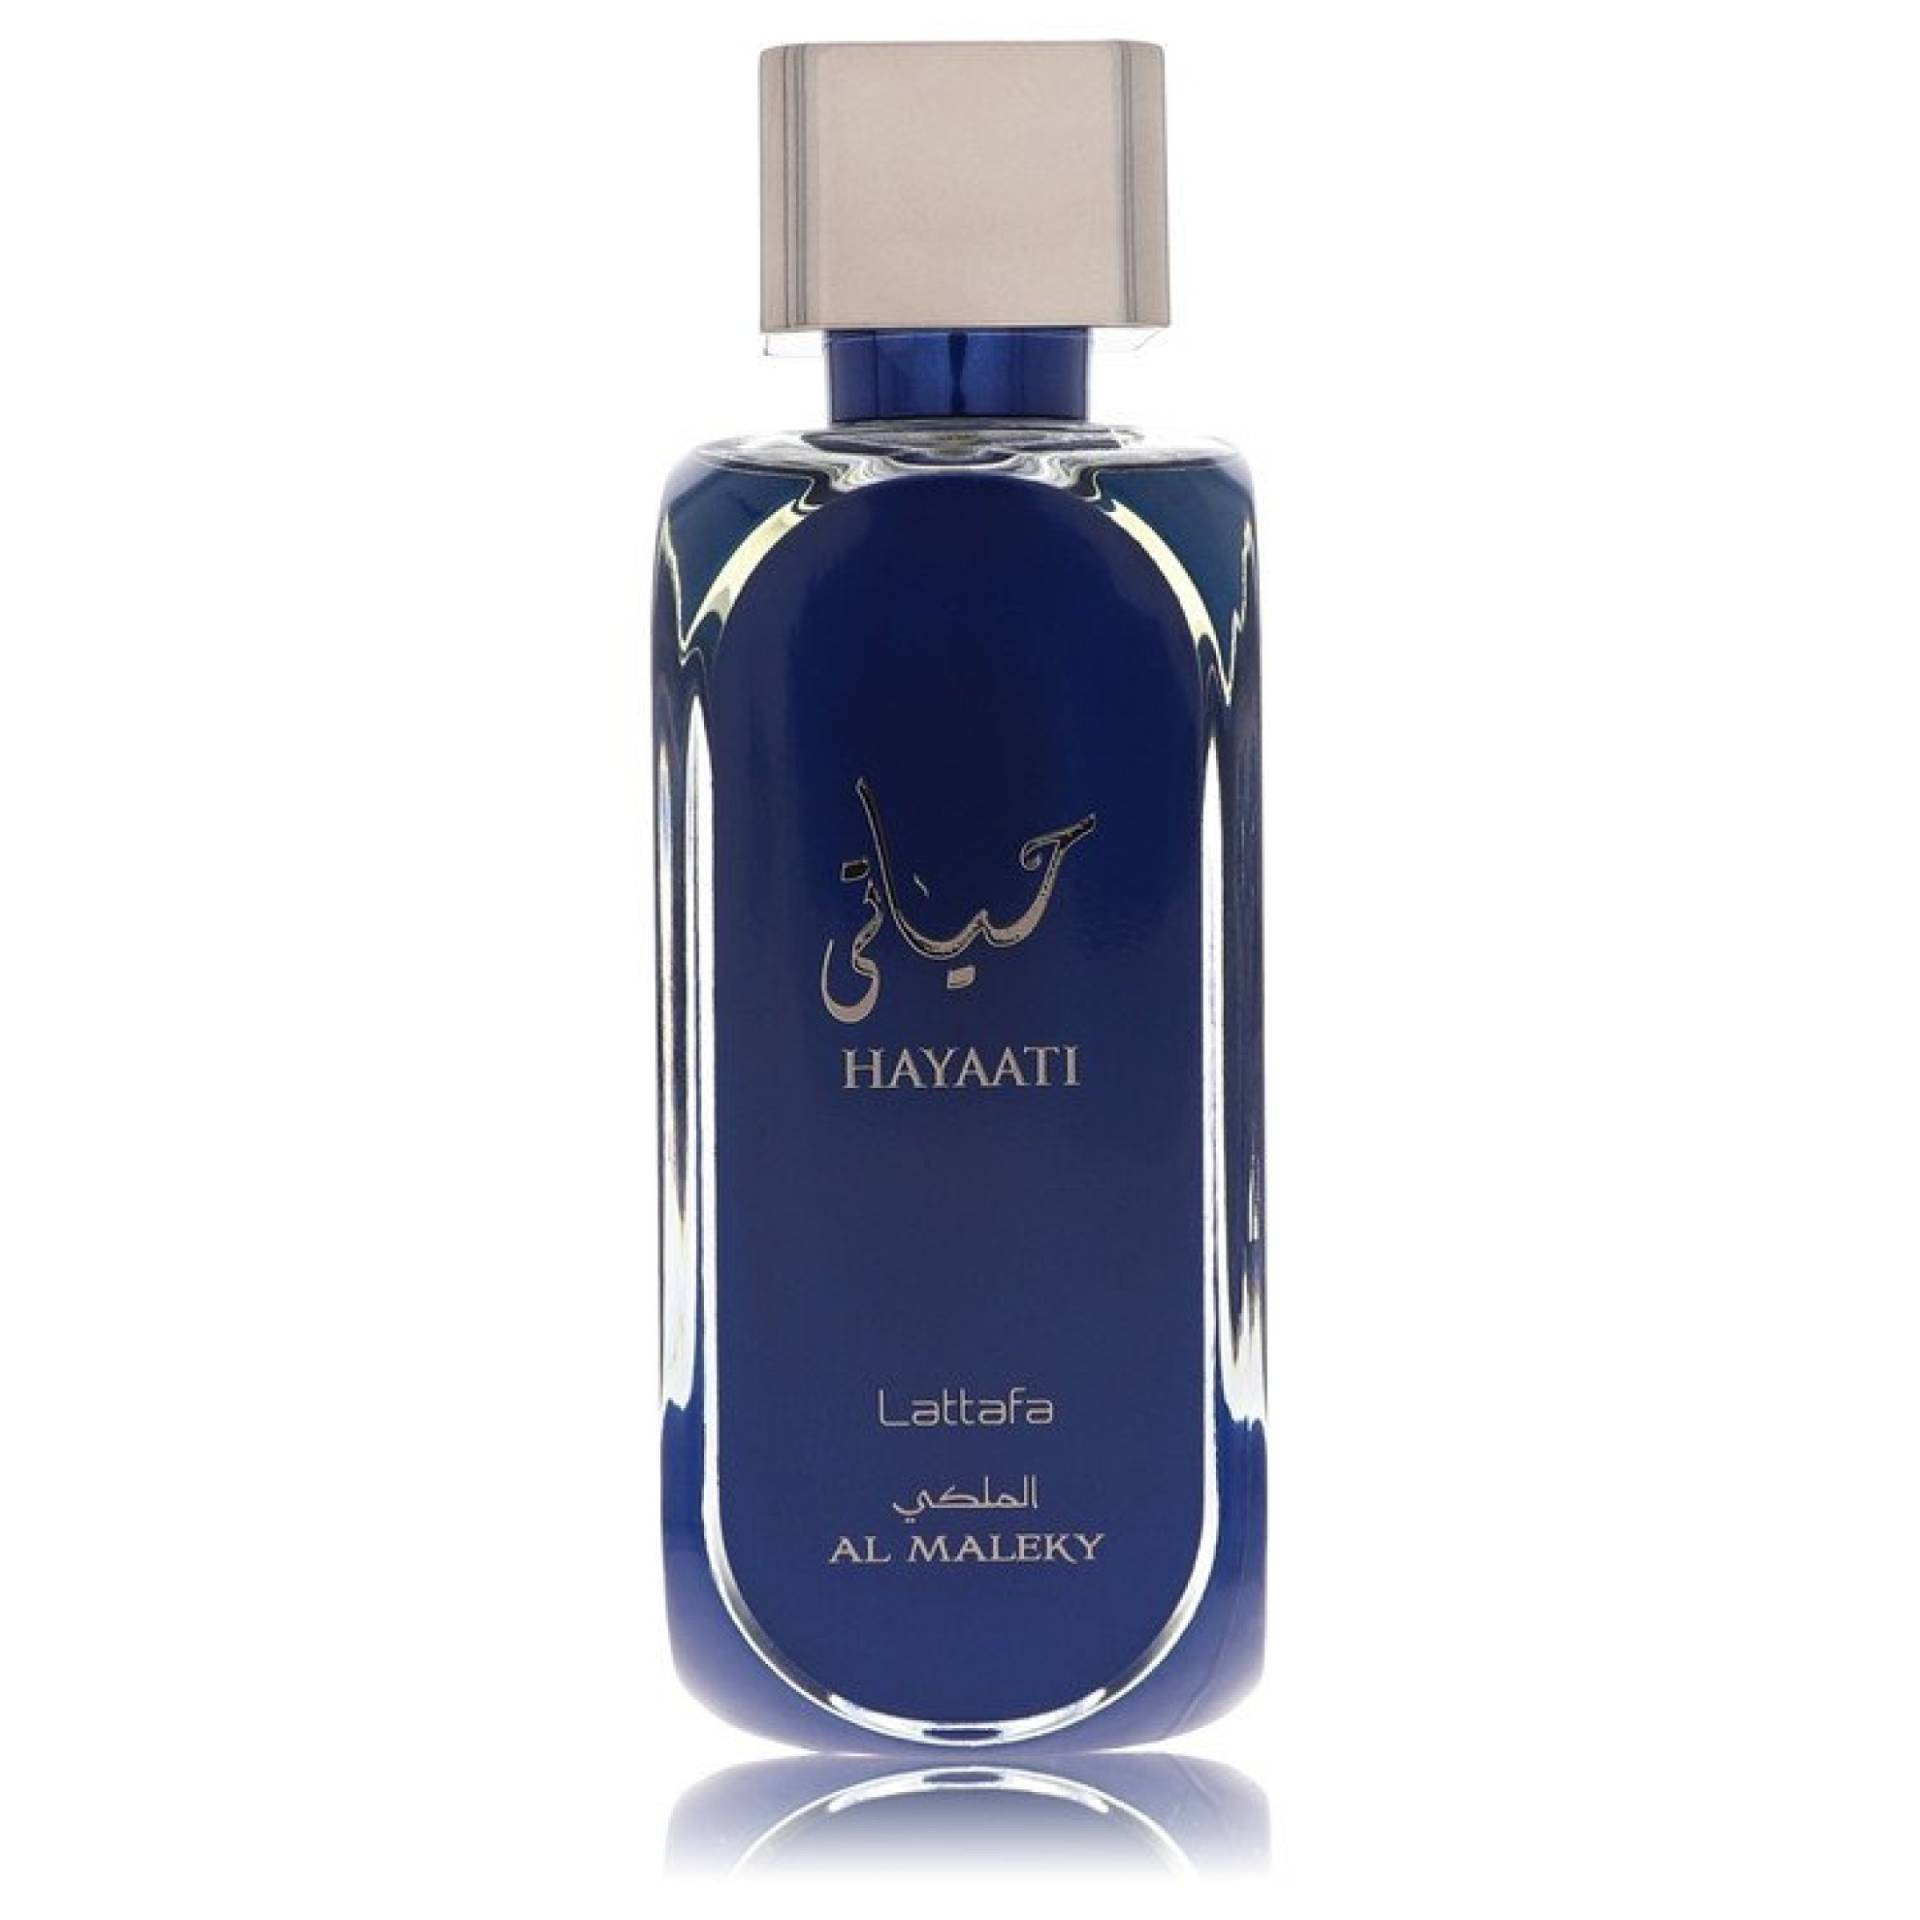 Lattafa Hayaati Al Maleky Eau De Parfum Spray (Unboxed) 101 ml von Lattafa